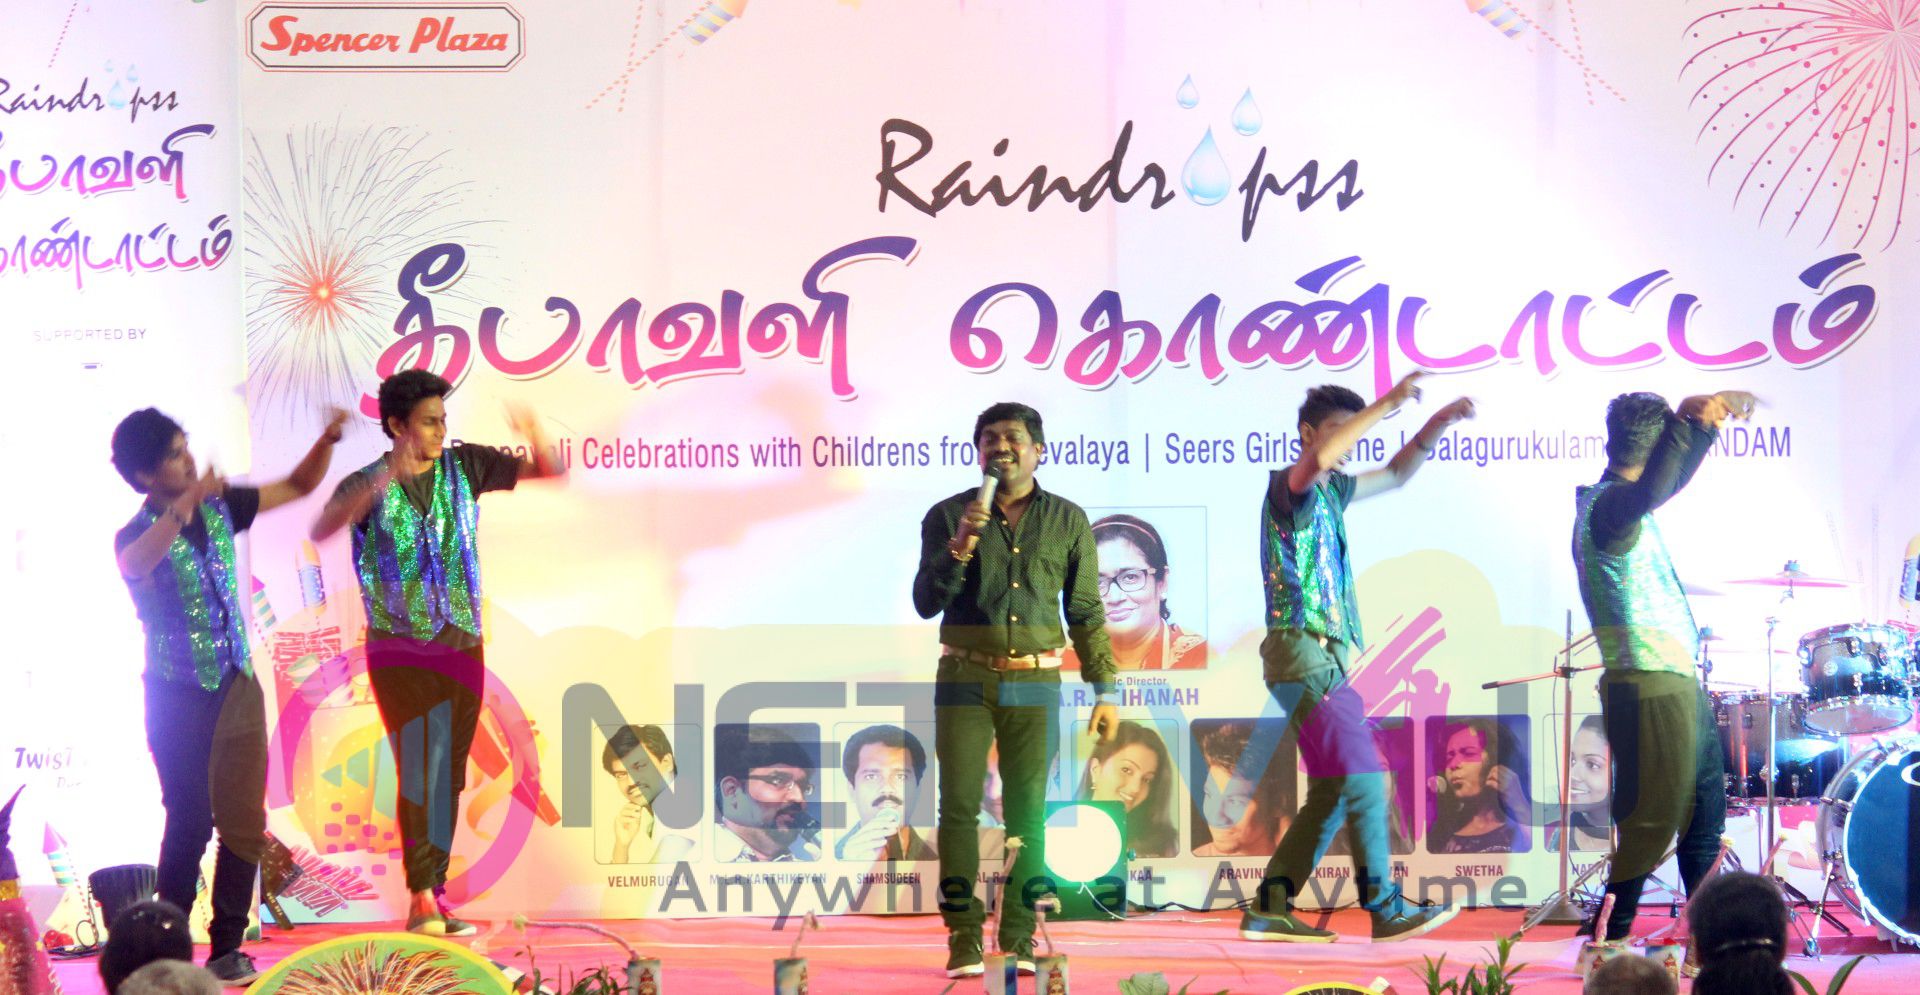 Raindropss Diwali Kondattam Musically With 375 Less Childrens Tamil Gallery